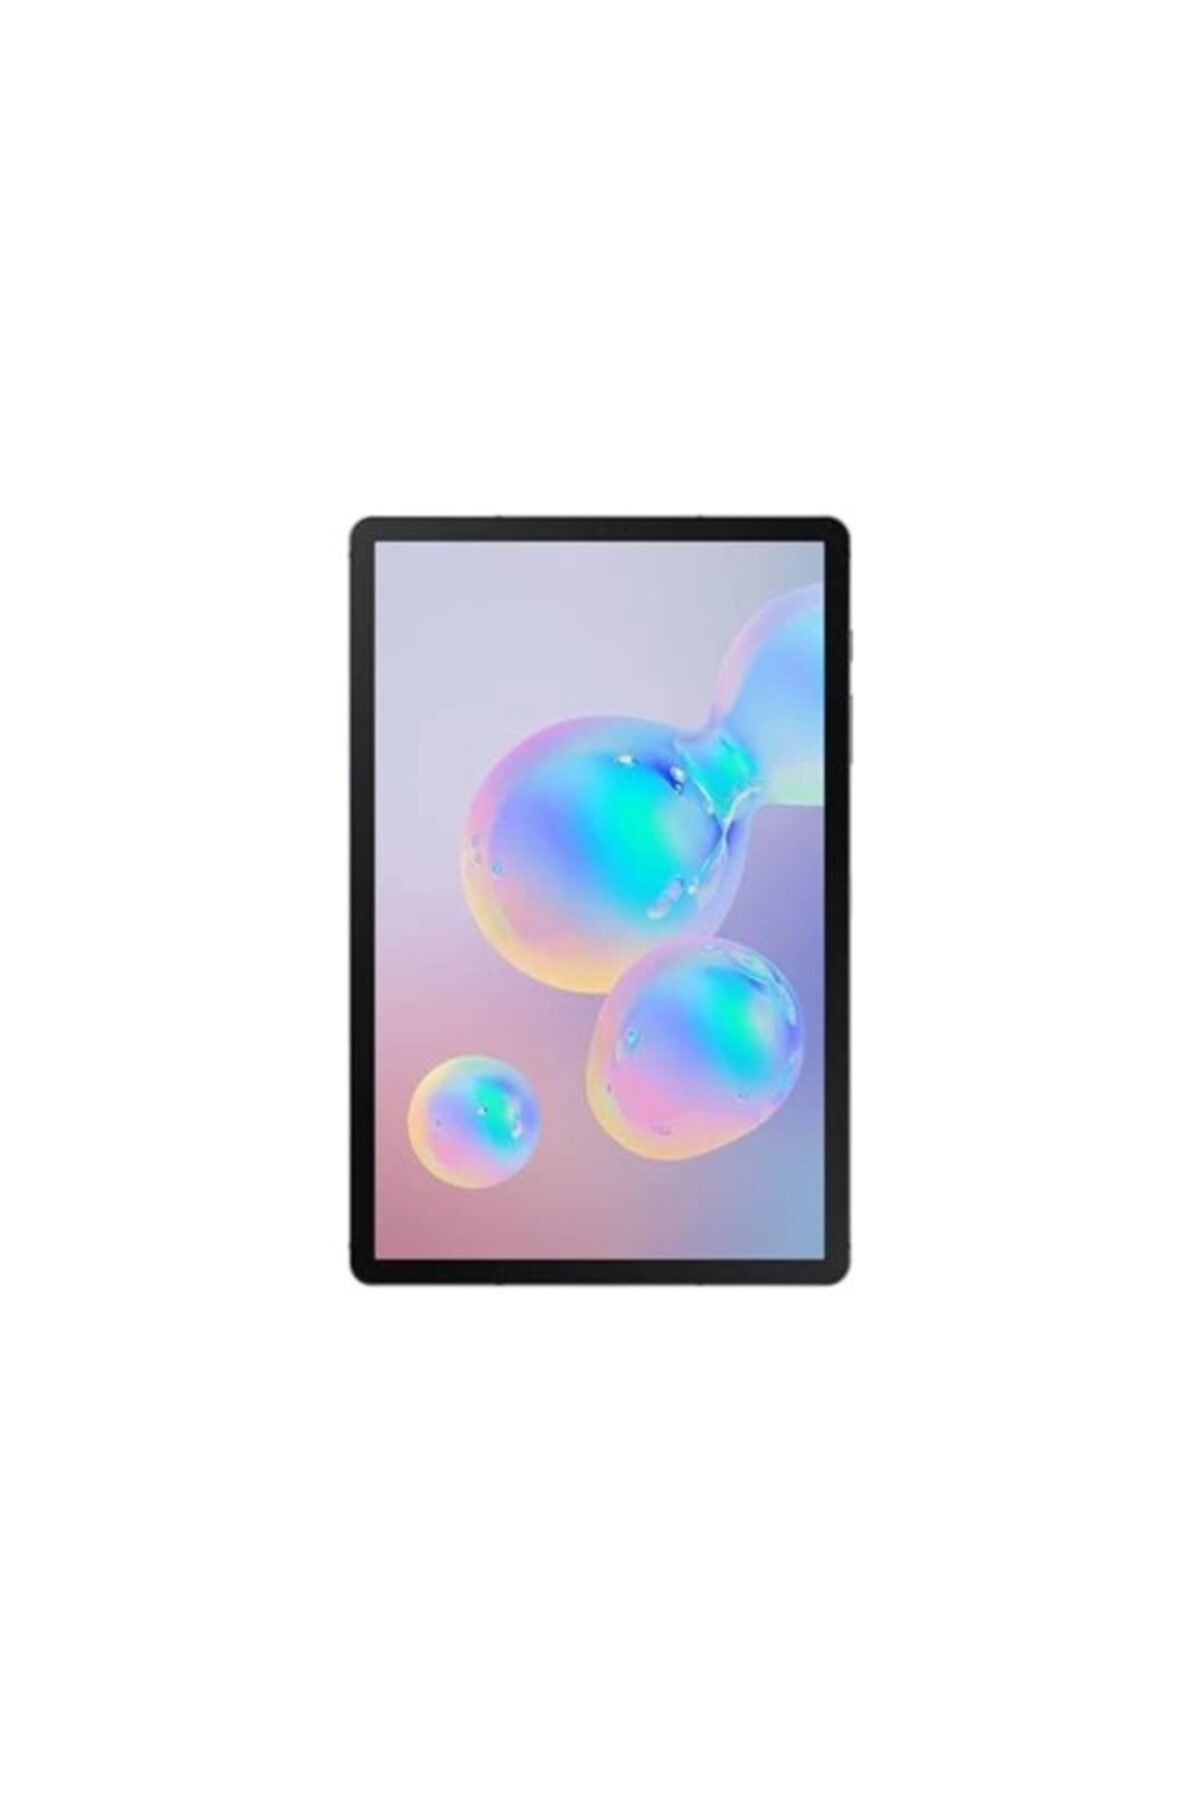 Samsung Galaxy Tab S6 Sm-t867 Lte 2019 Tablet